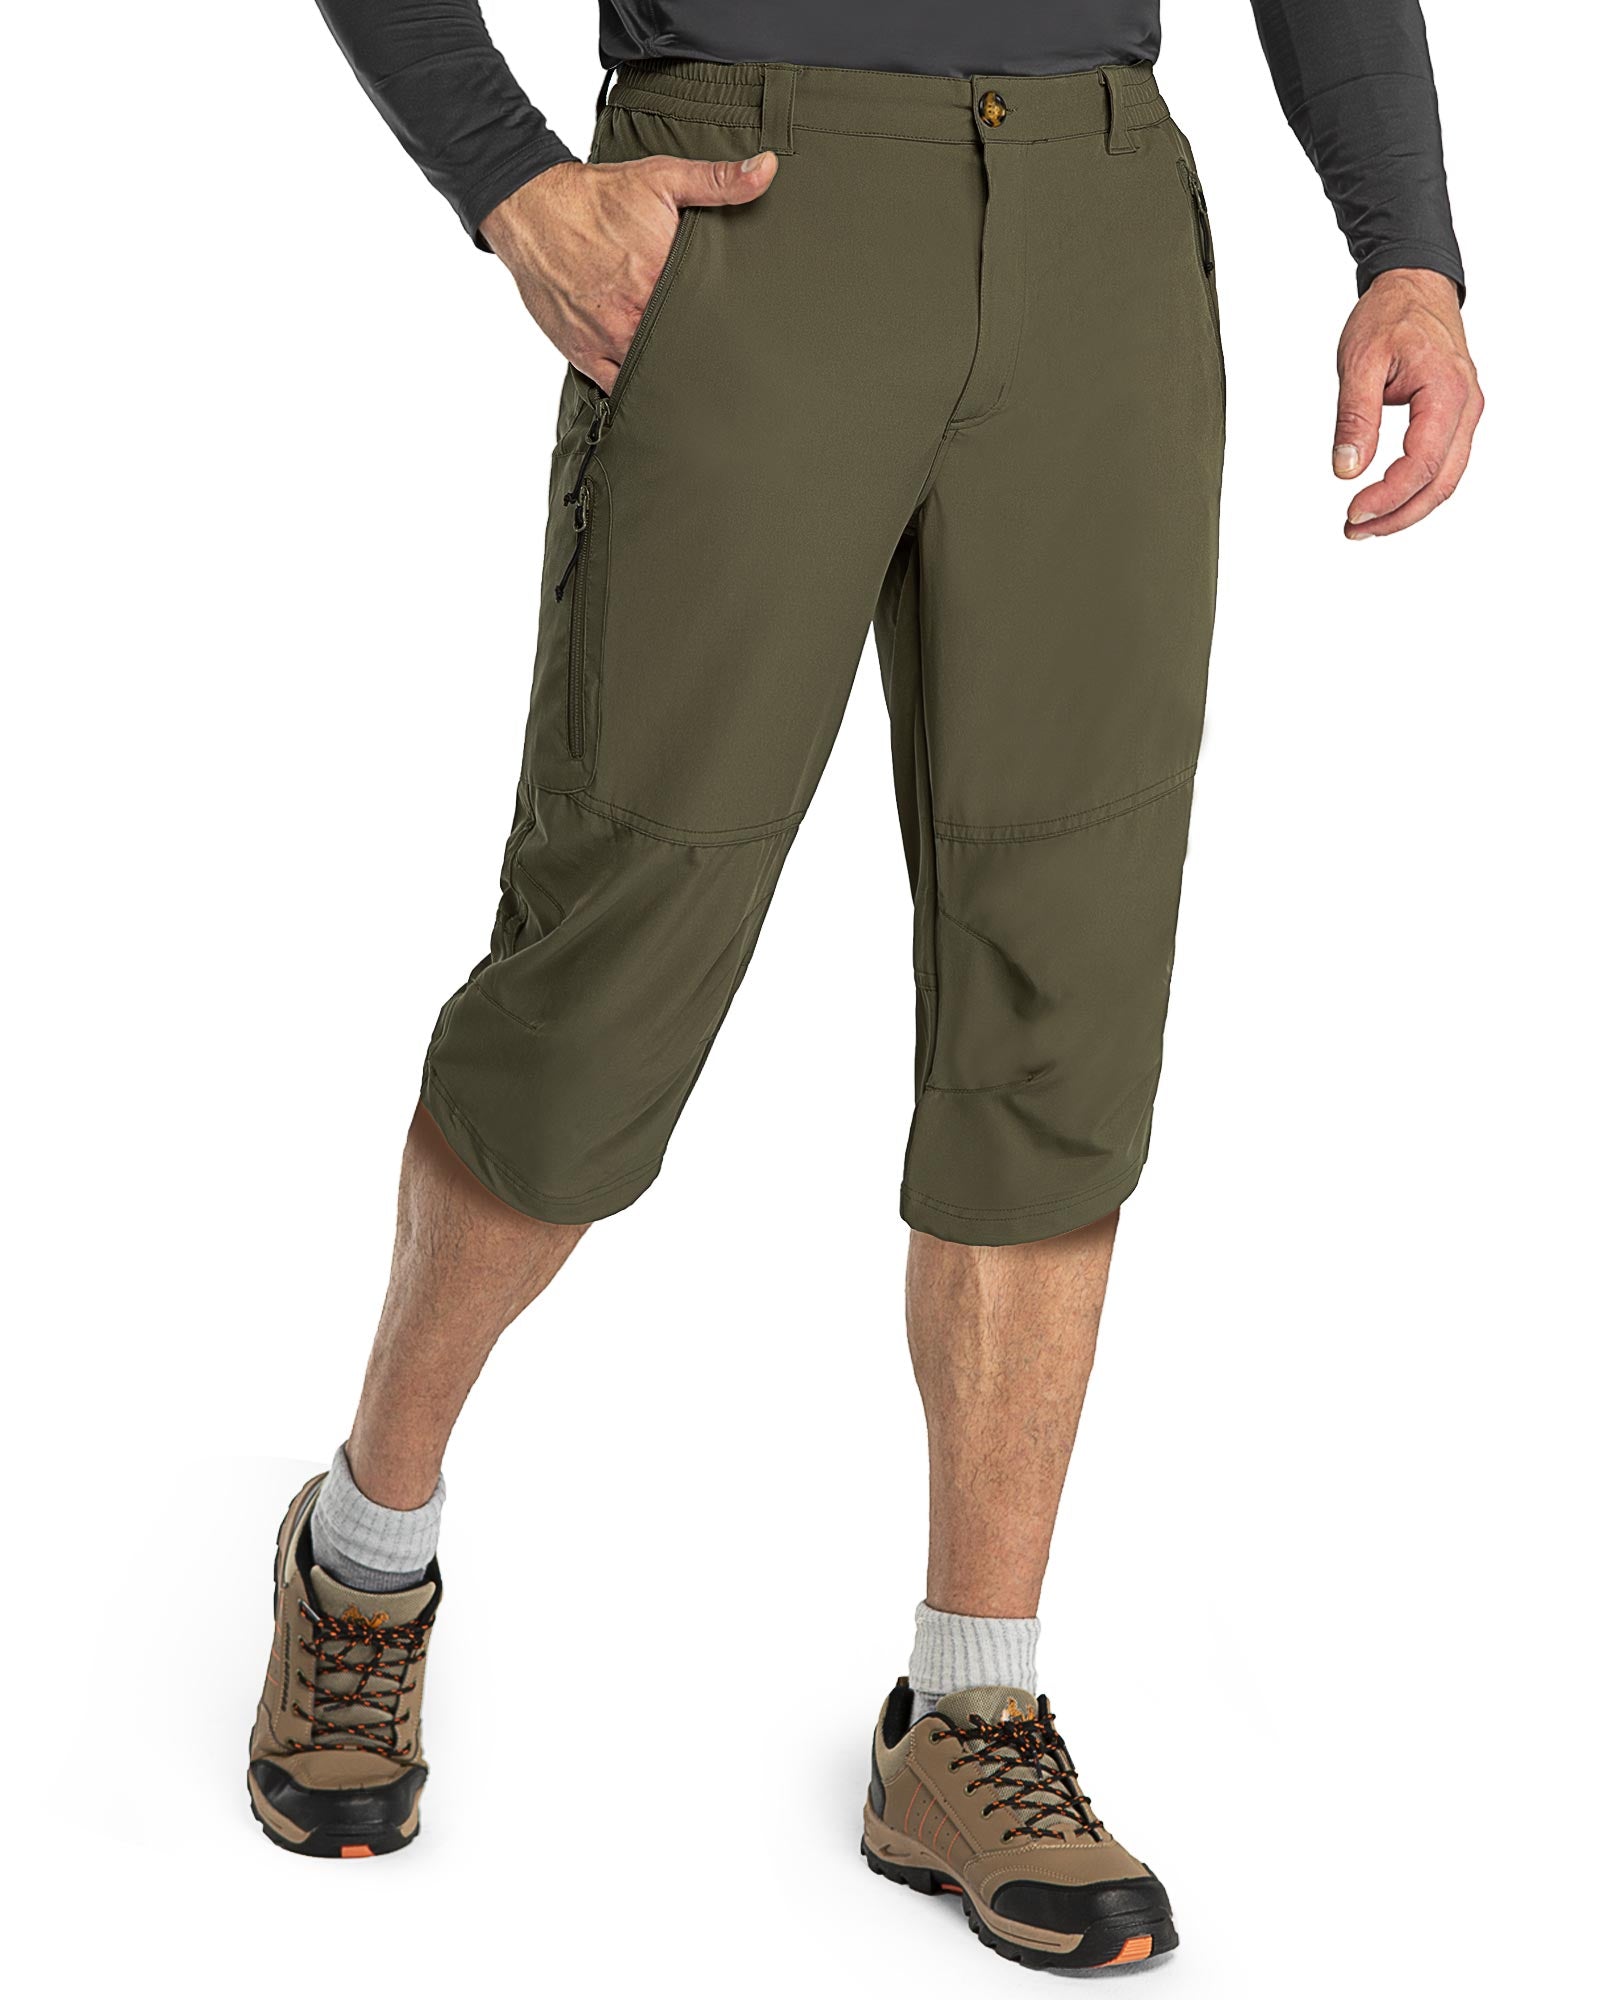 Jack Wolfskin Mens Activate Light 3/4 Pants M, Phantom, S Reg at Amazon  Men's Clothing store